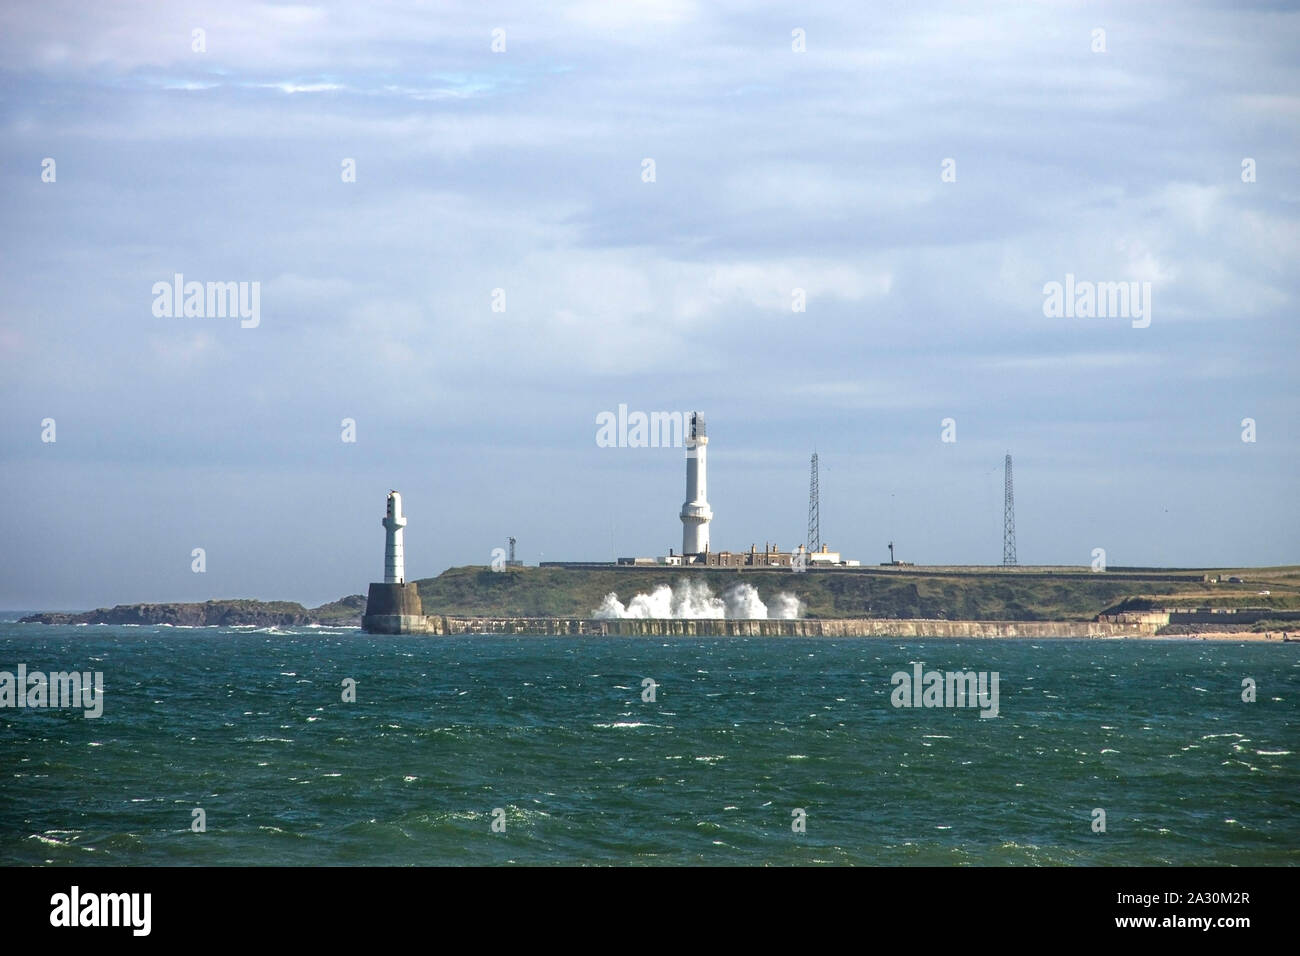 Lighthouse in Aberdeen, Scotland, UK Stock Photo